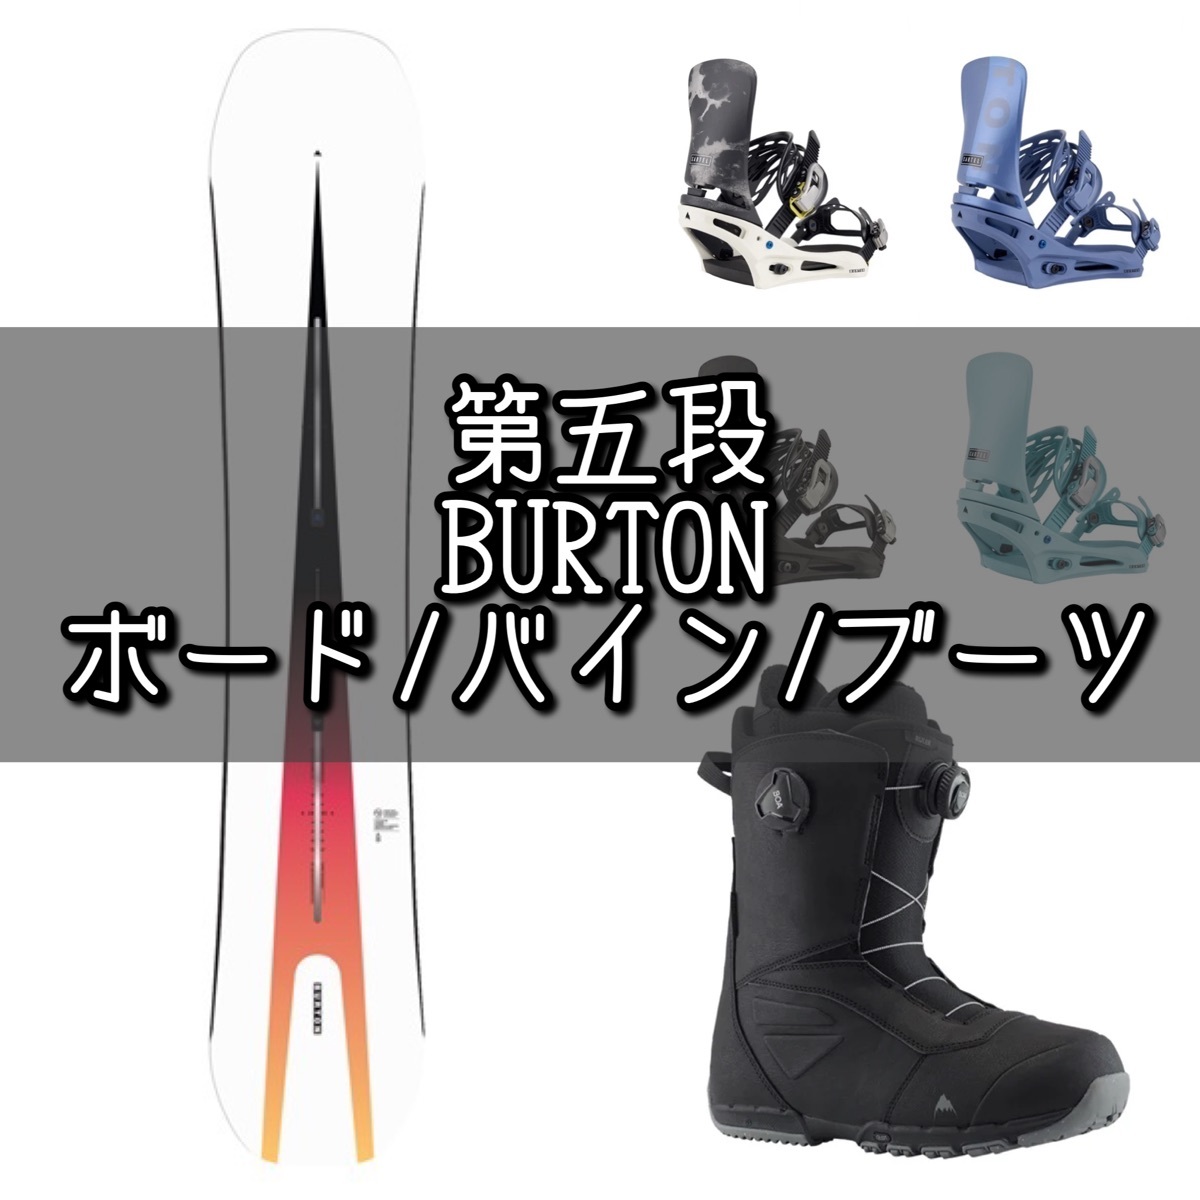 23-24『BURTON』オススメボード・バイン・ブーツ